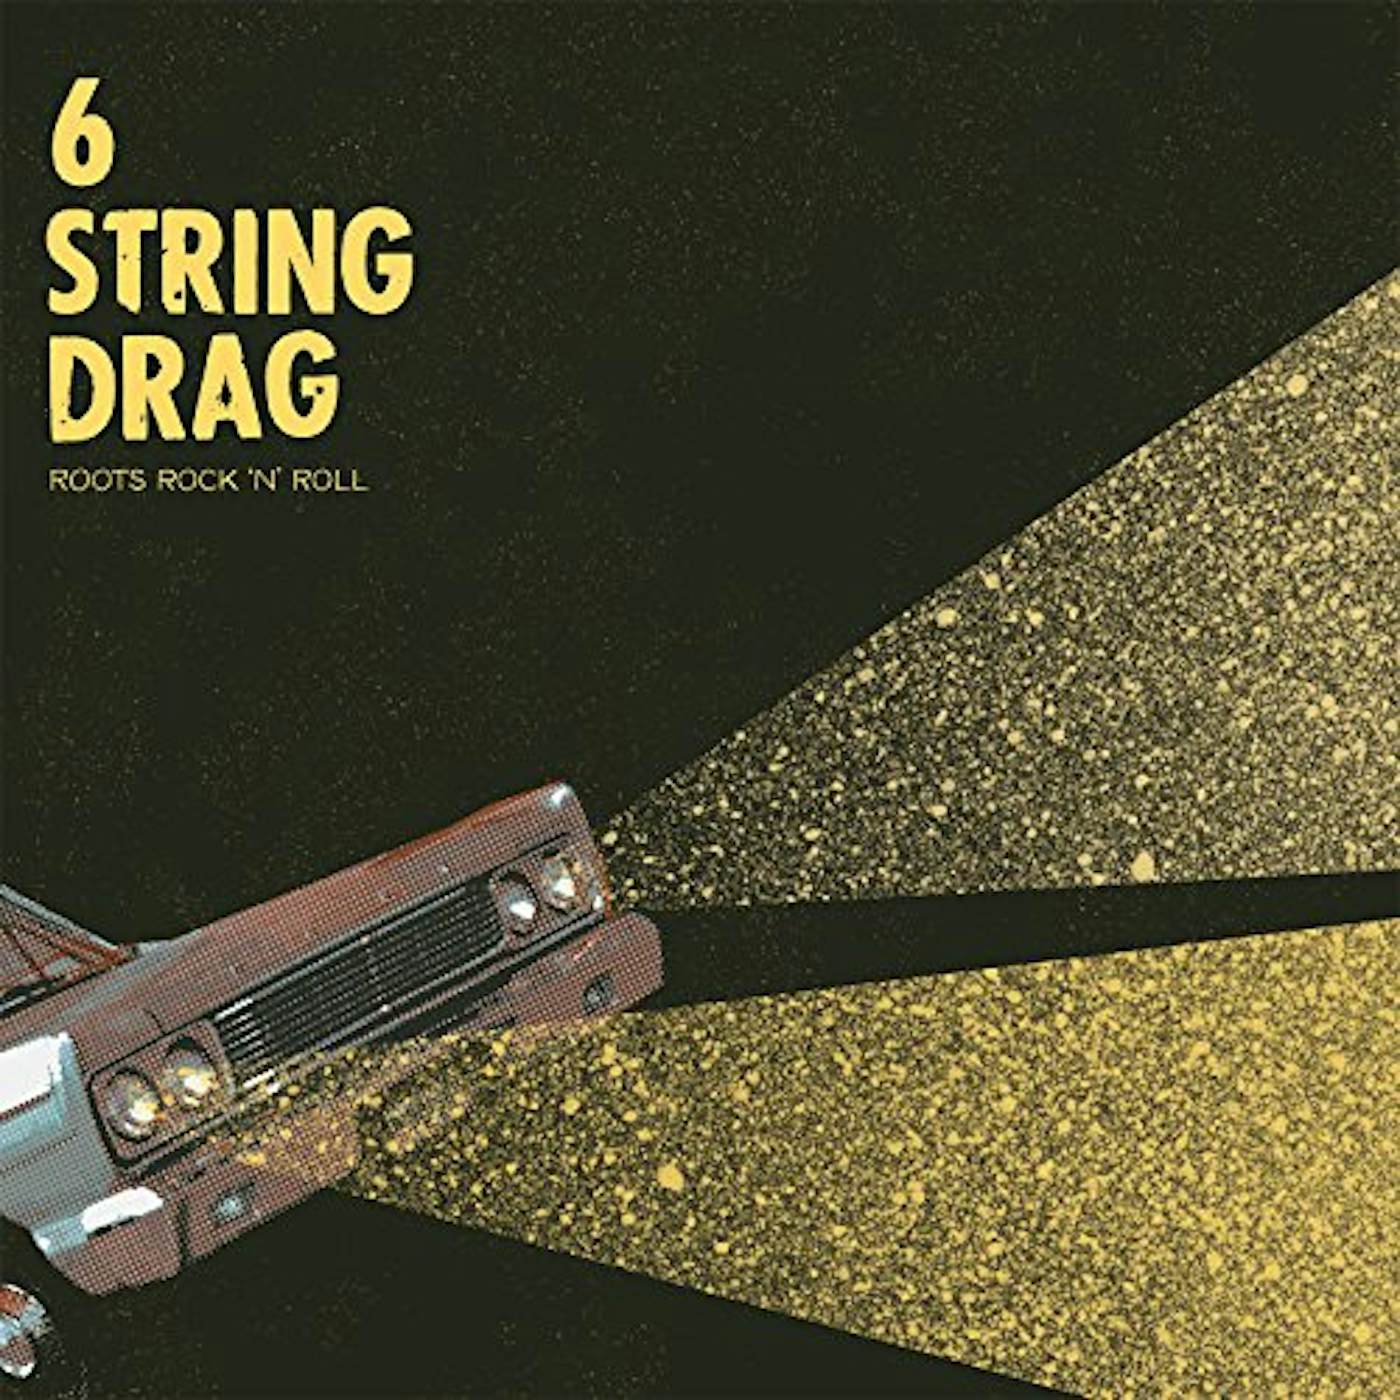 6 String Drag ROOTS ROCK 'N' ROLL CD